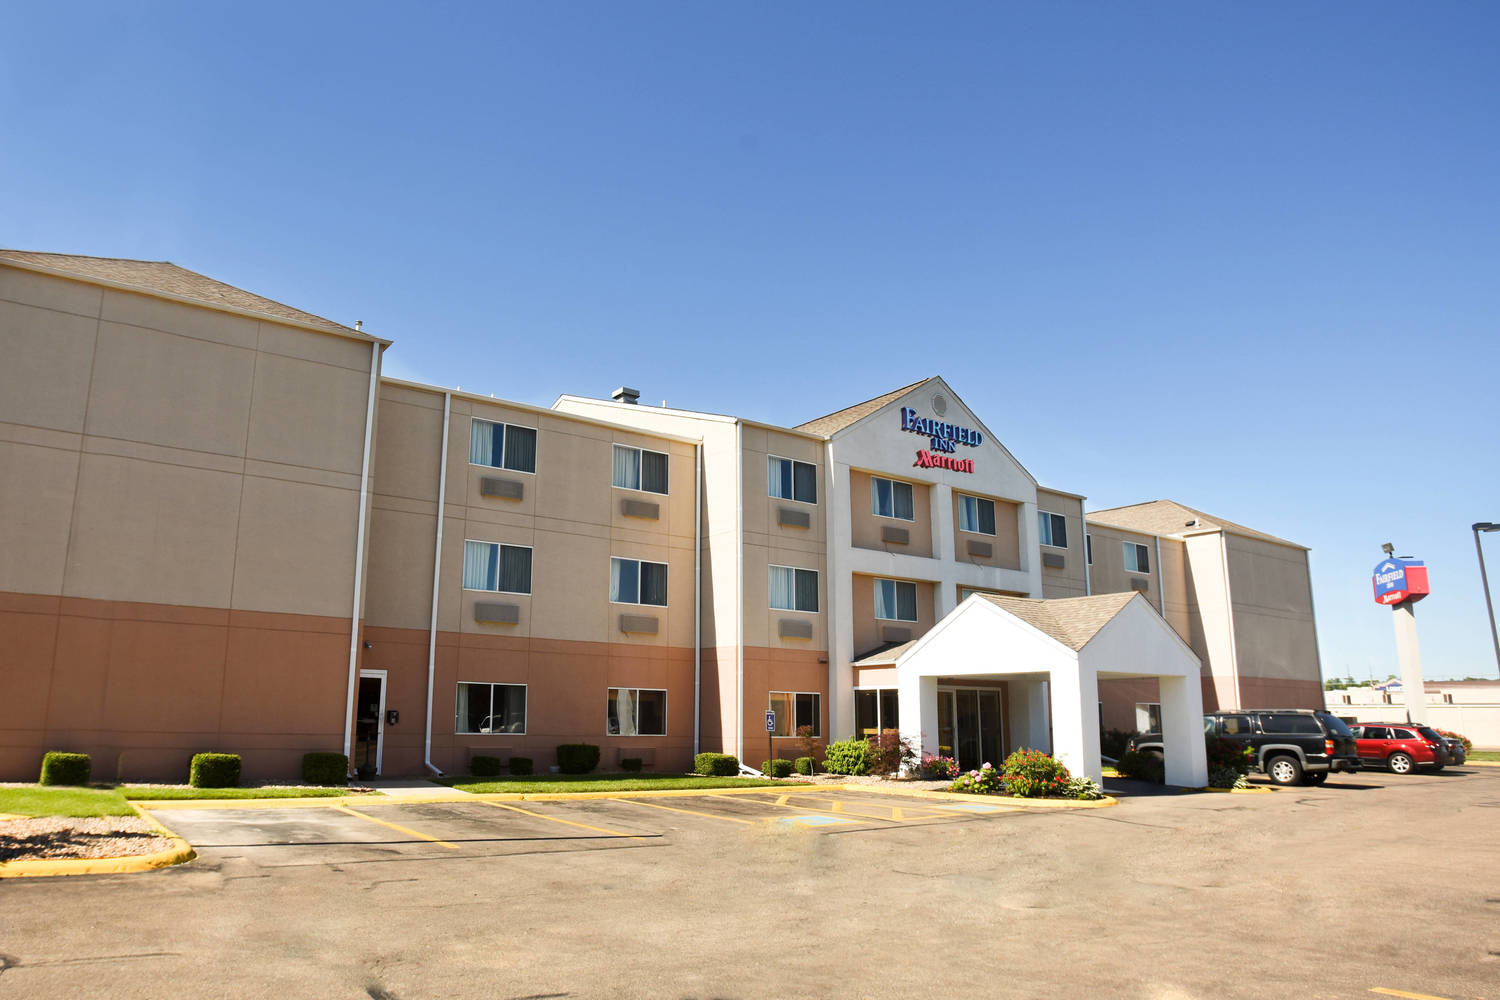 Fairfield Inn Topeka, Topeka, KS Jobs | Hospitality Online